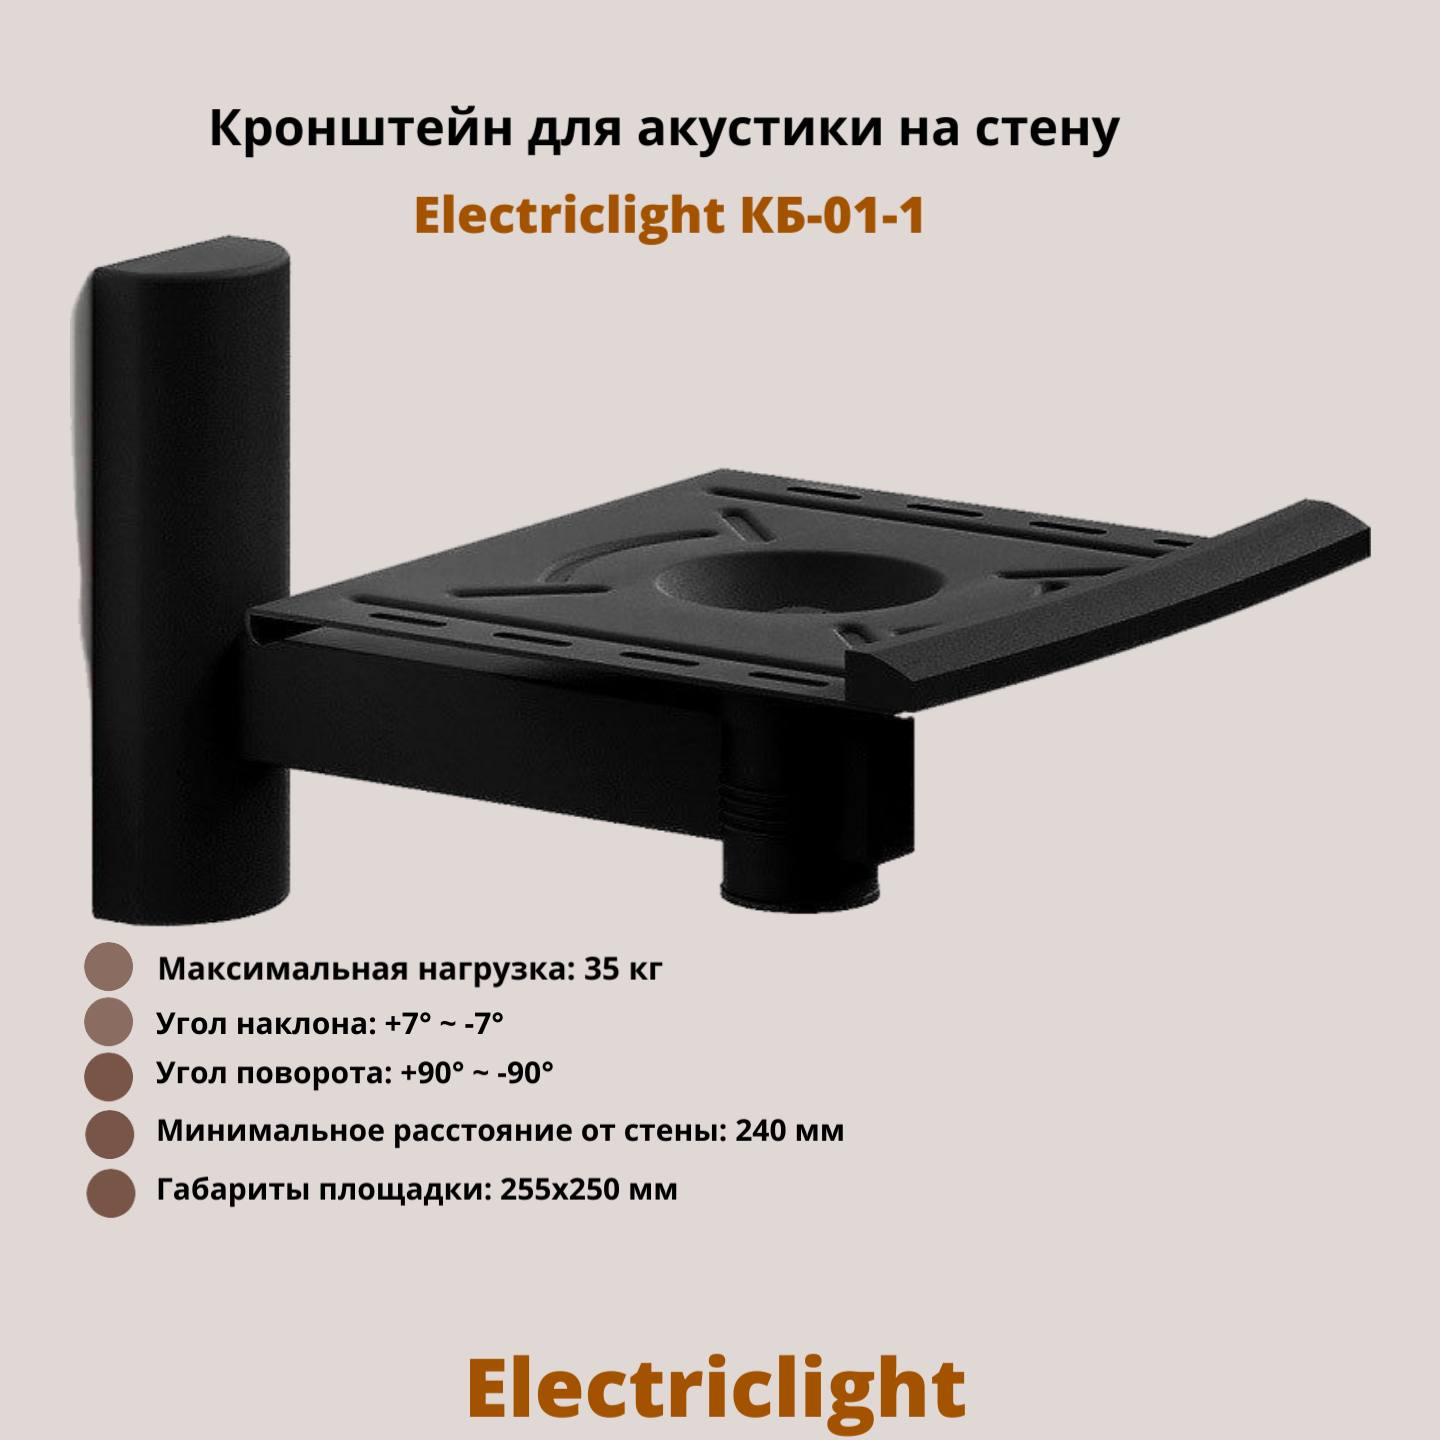 Кронштейн для акустики на стену наклонно-поворотный Electriclight КБ-01-1, черный